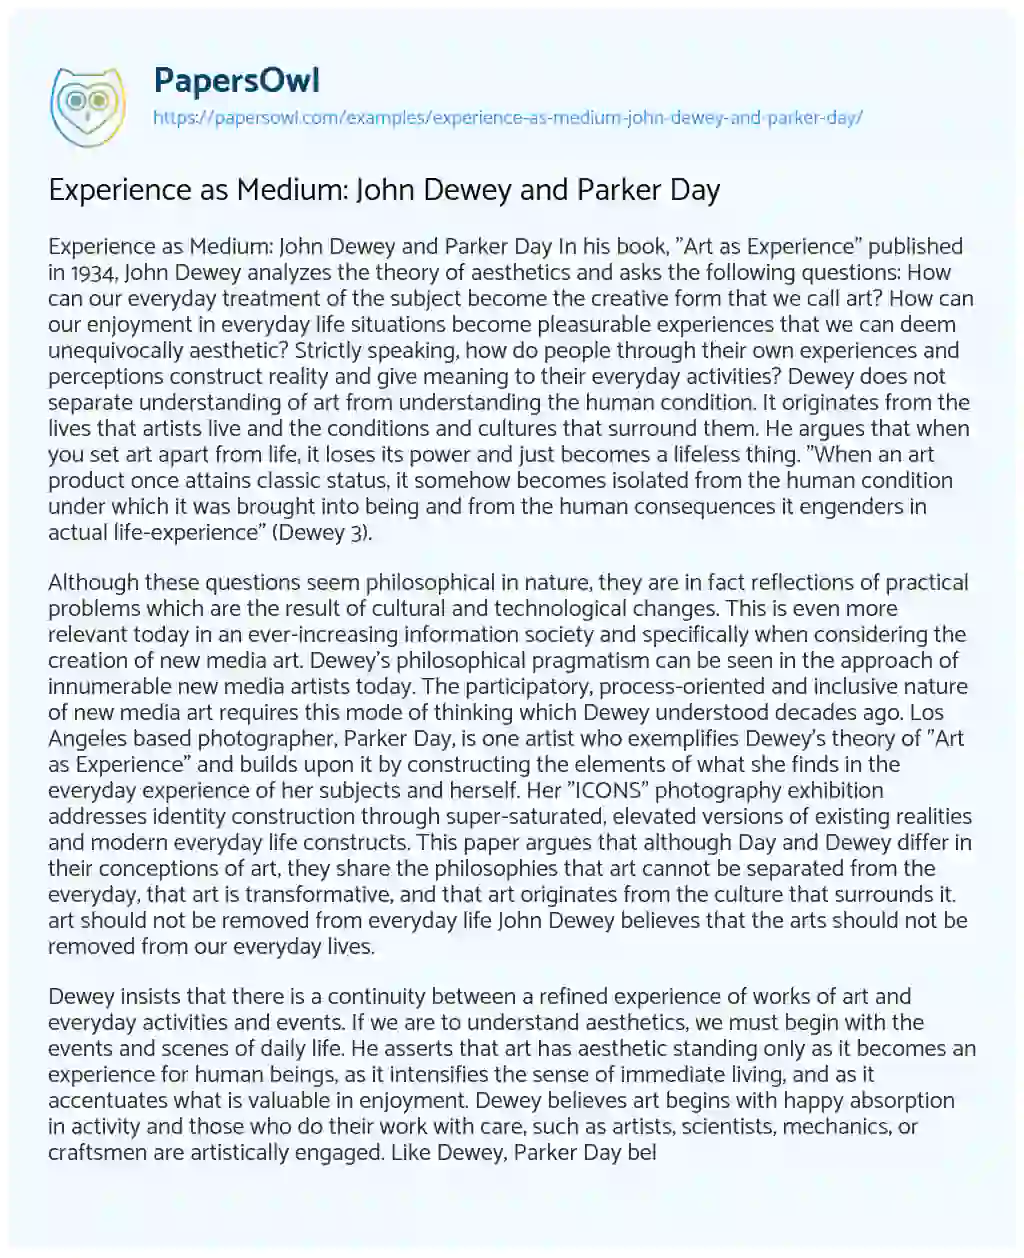 Essay on Experience as Medium: John Dewey and Parker Day